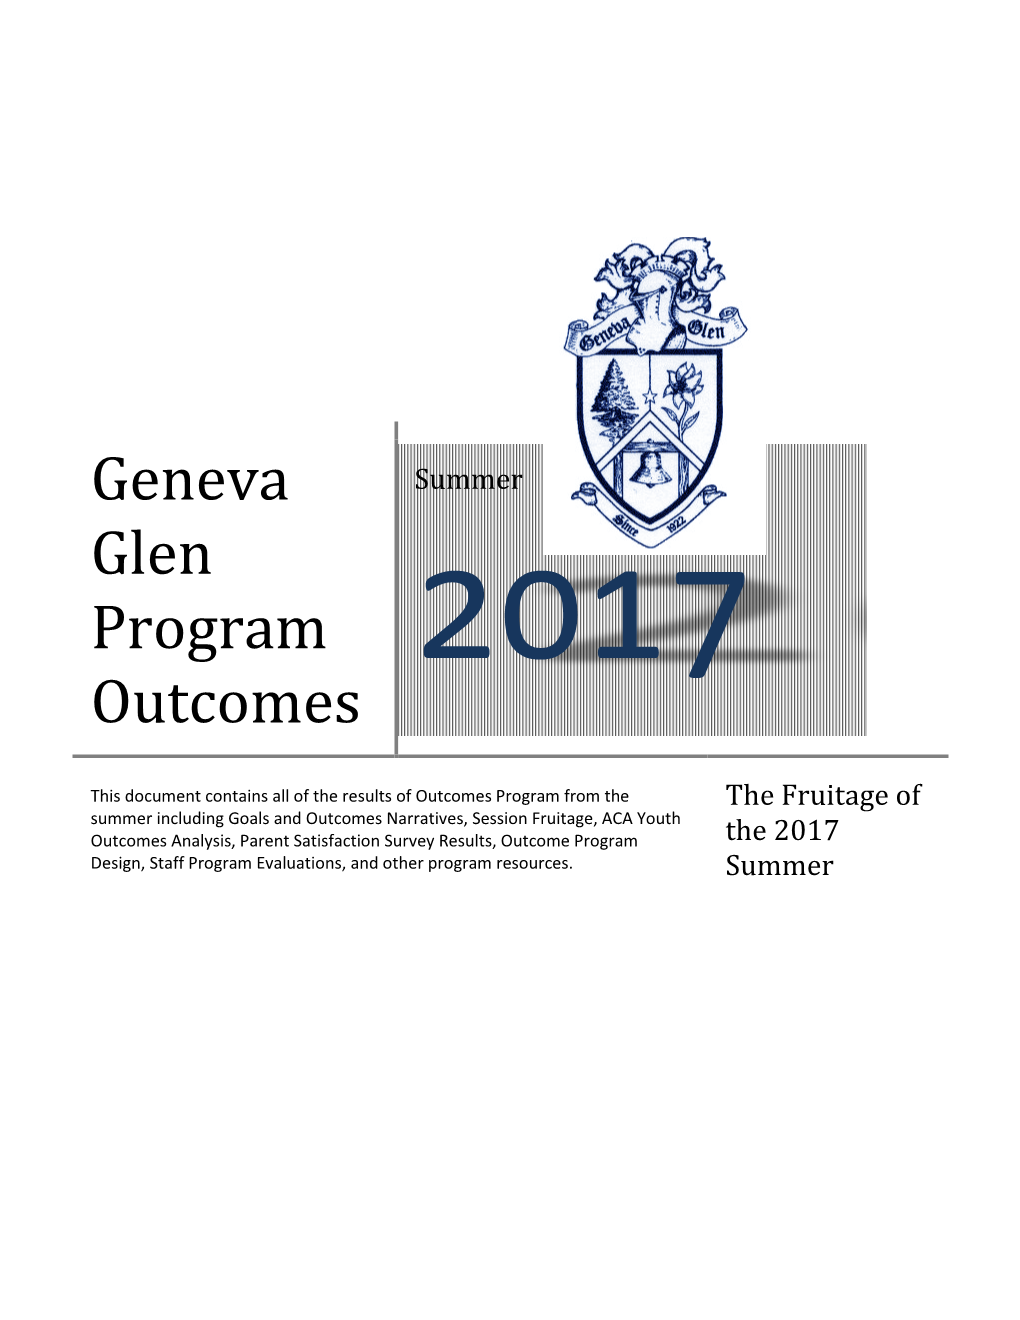 Geneva Glen Program Outcomes